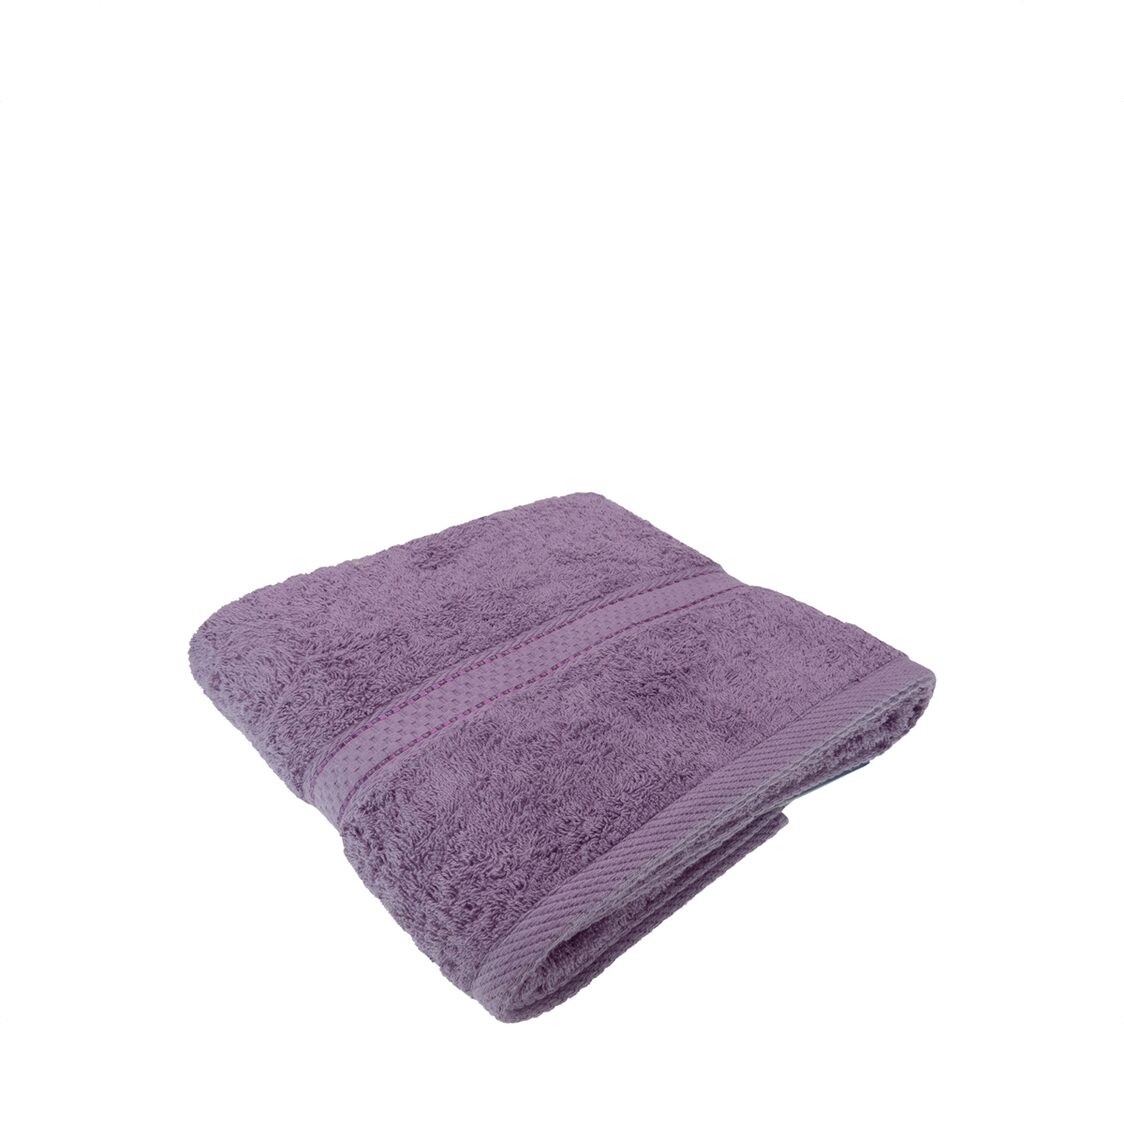 Charles Millen Suite Collection CT108 Classique Bath Towel Heather Dark Purple